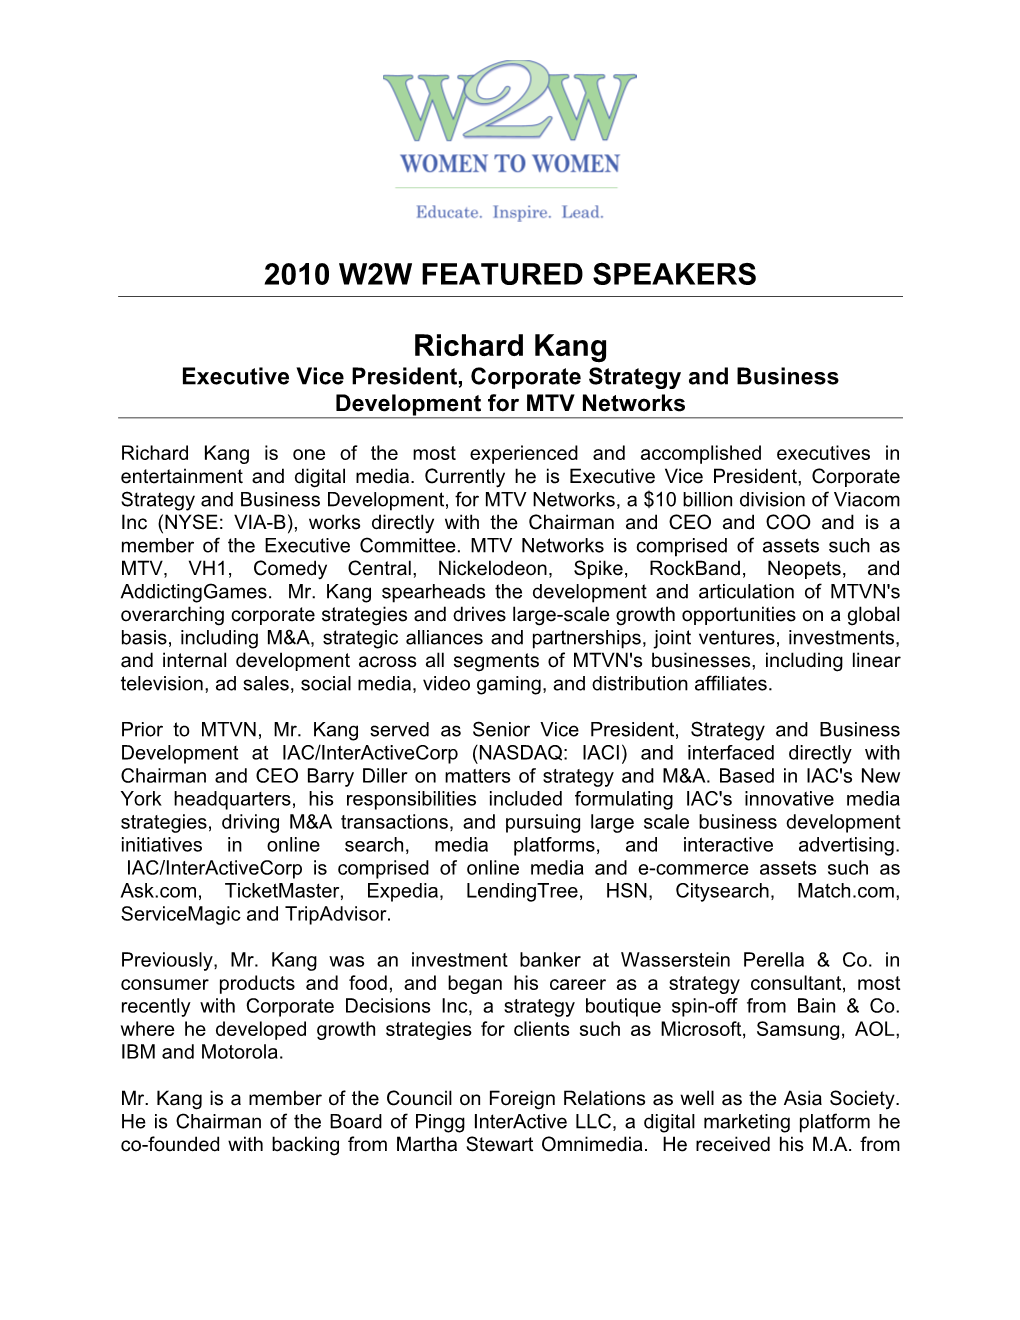 W2W 2010 Speaker Bios